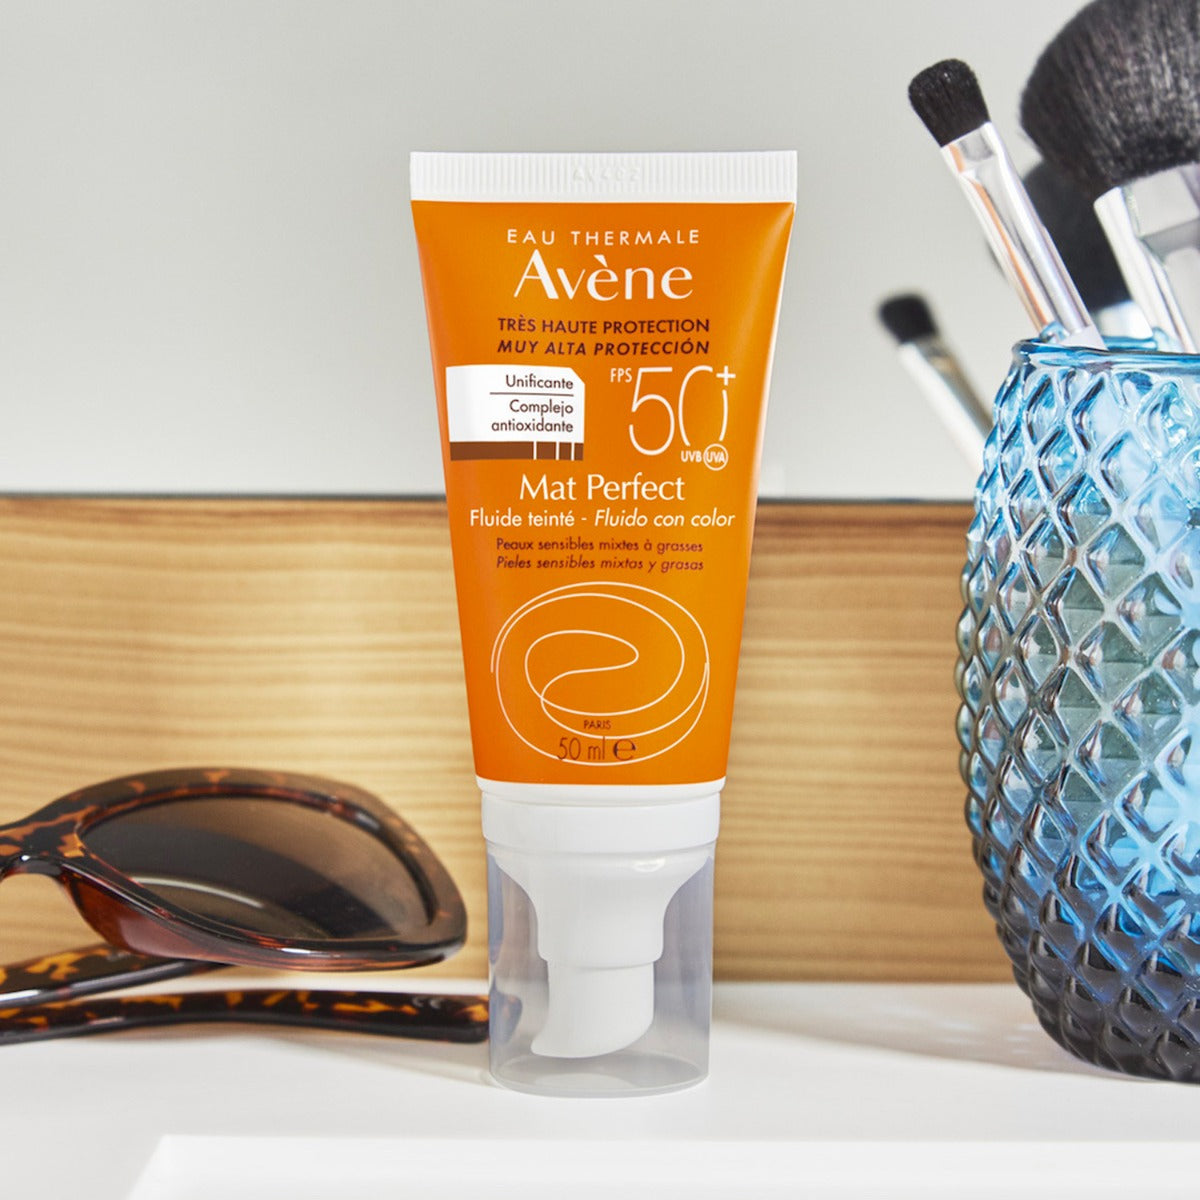 Avene Sunscreen Fluid Color Mat Perfect SPF 50+ (50Ml / 1.69Fl Oz) - Very High Protection, Paraben & Perfume Free